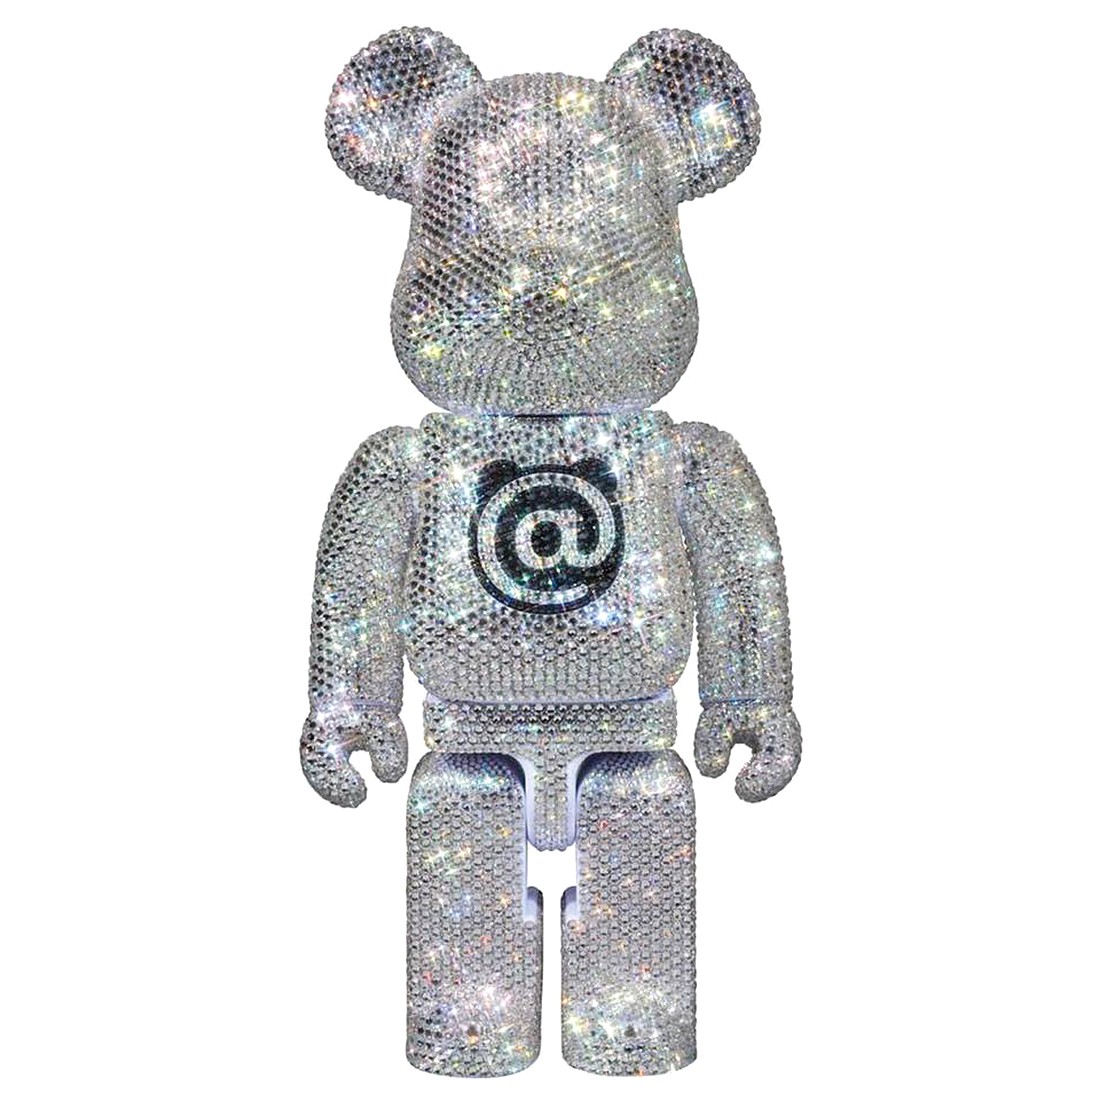 Medicom Lights Style Swarovski Crystal Decorate 400% Bearbrick Figure (silver)